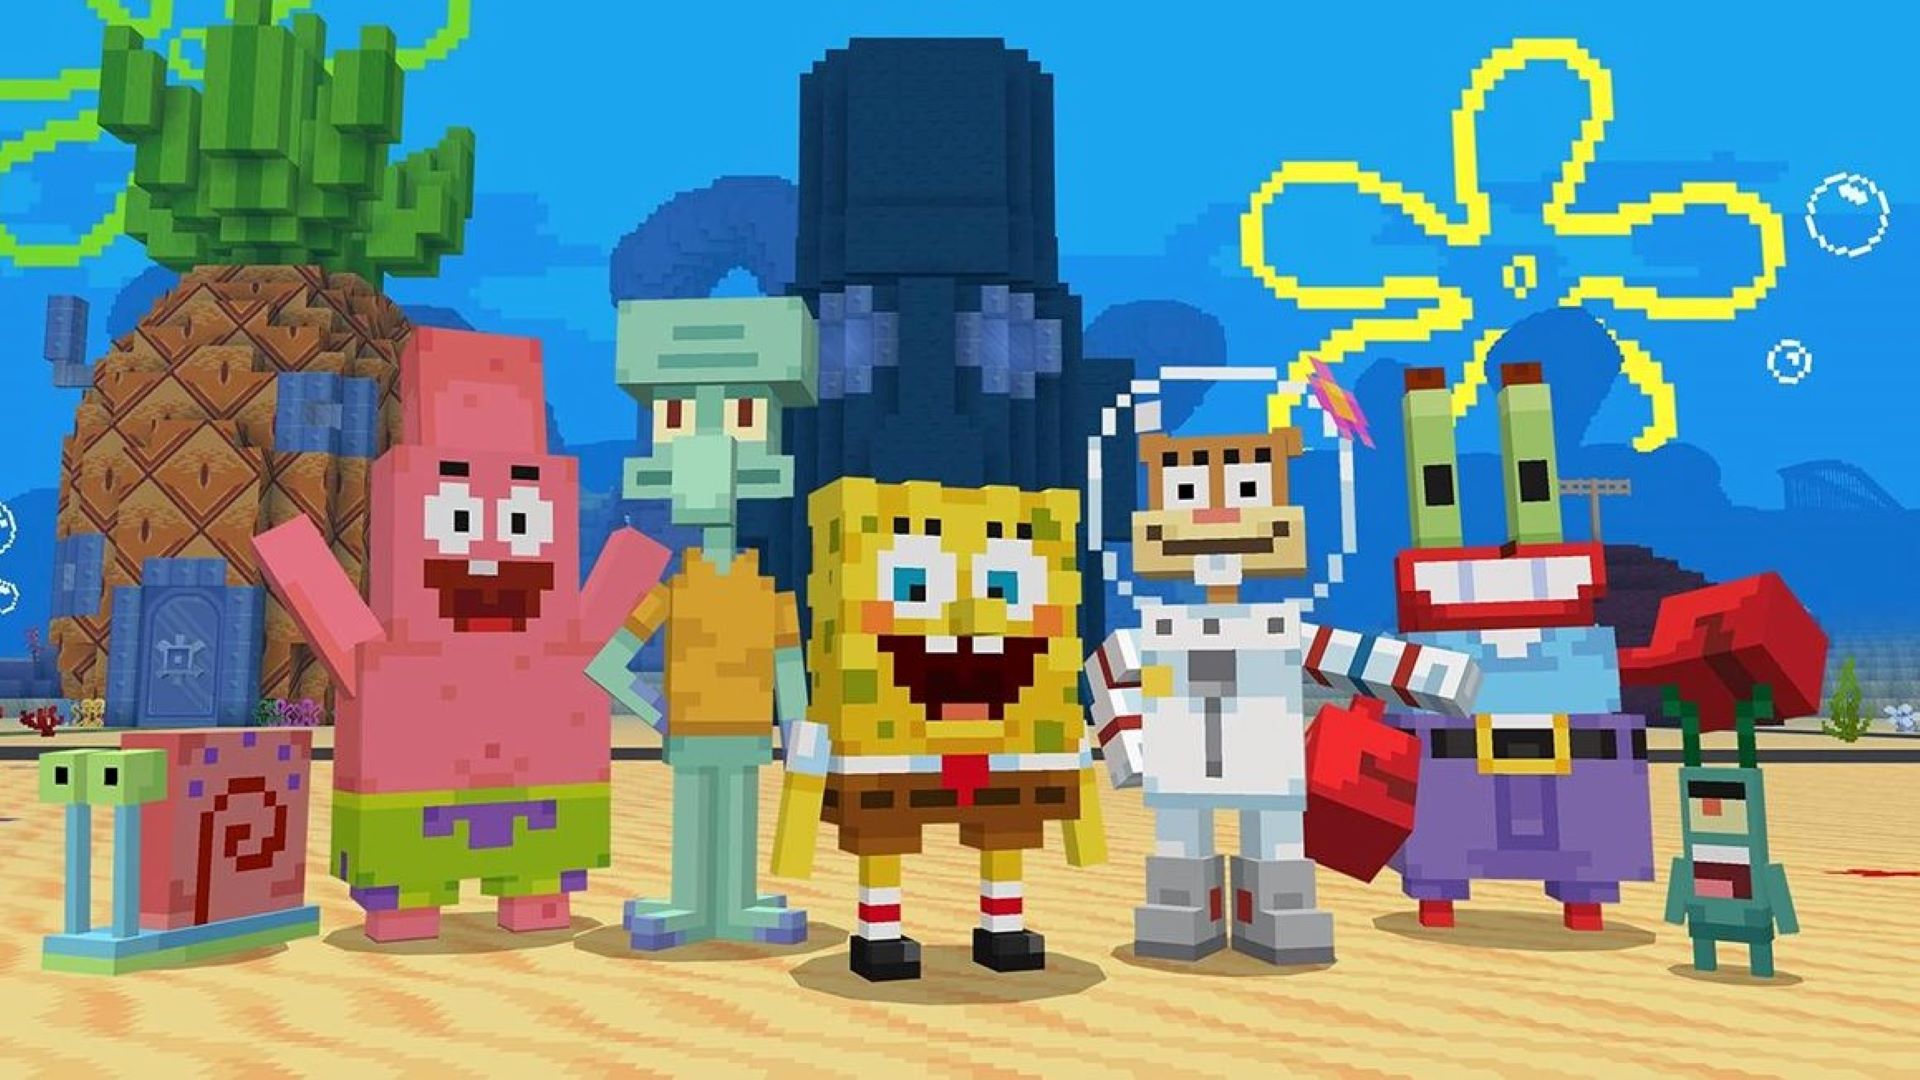 Minecraft Spongebob Squarepants DLC invites you to Bikini Bottom